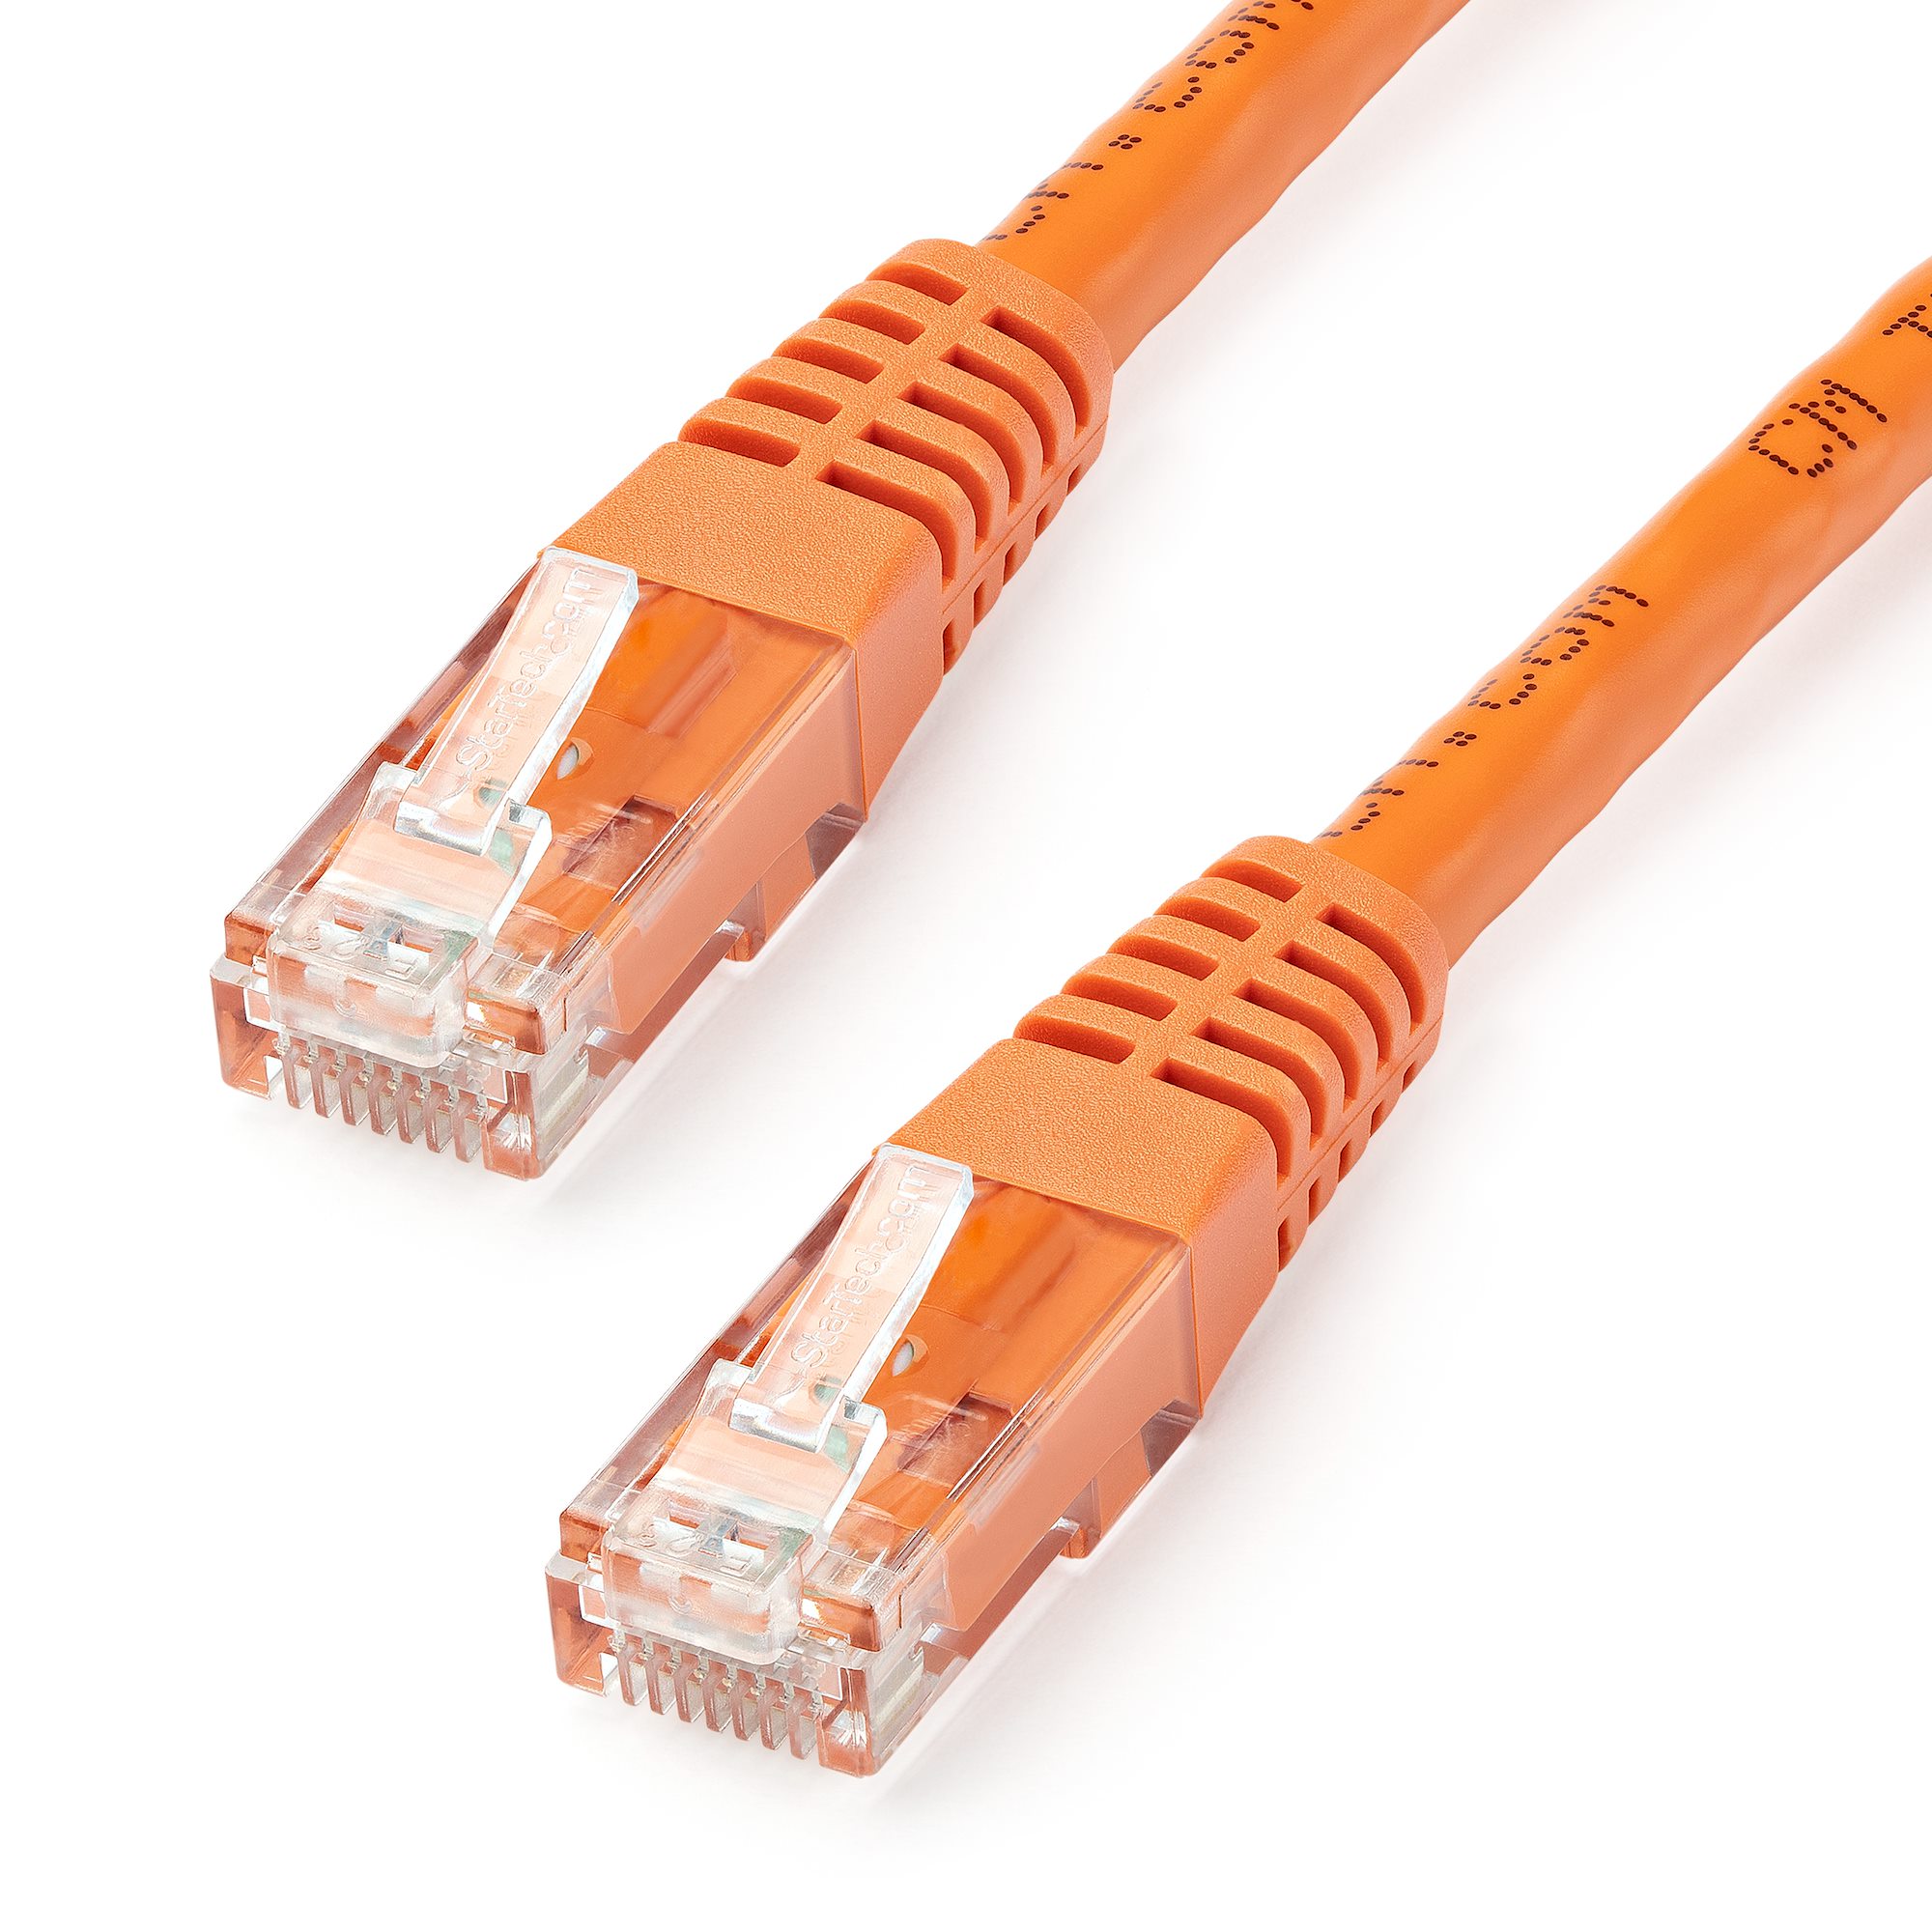 100ft Cat6 Ethernet Cable Orange Poe